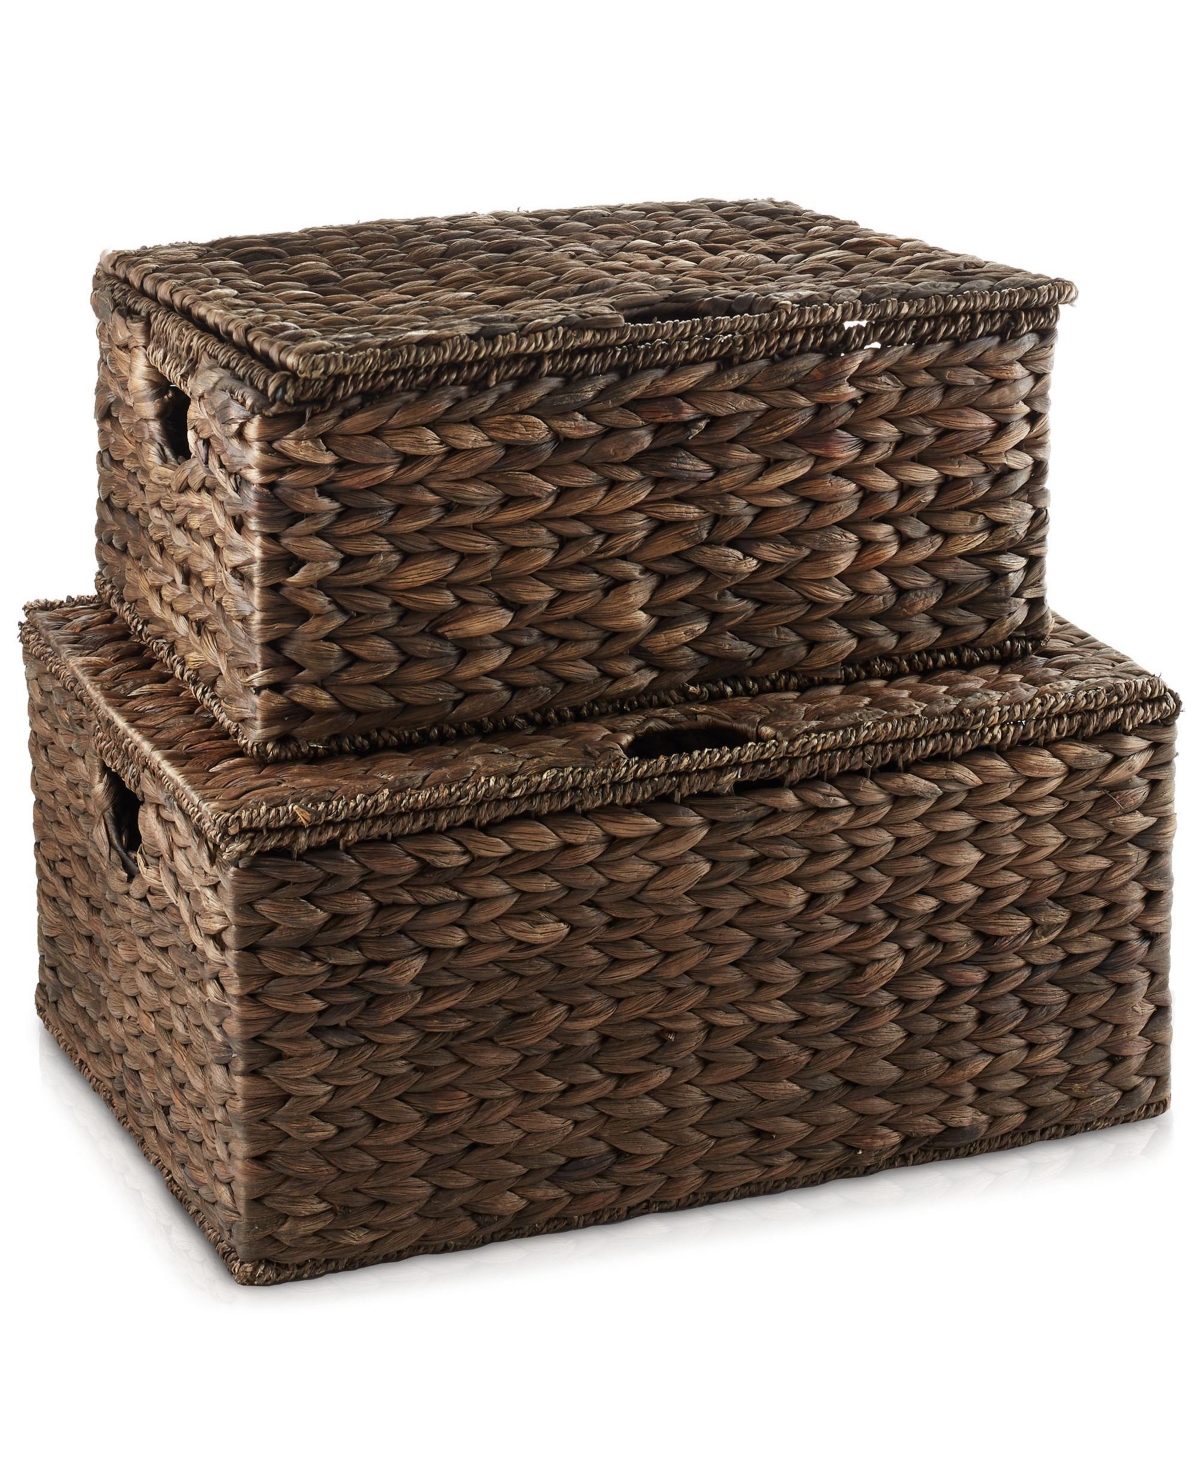 Set of 3 Water Hyacinth Storage Baskets (Small/Medium/Large), Multipurpose Organizer Rectangular Totes with Removable Lids - Espresso